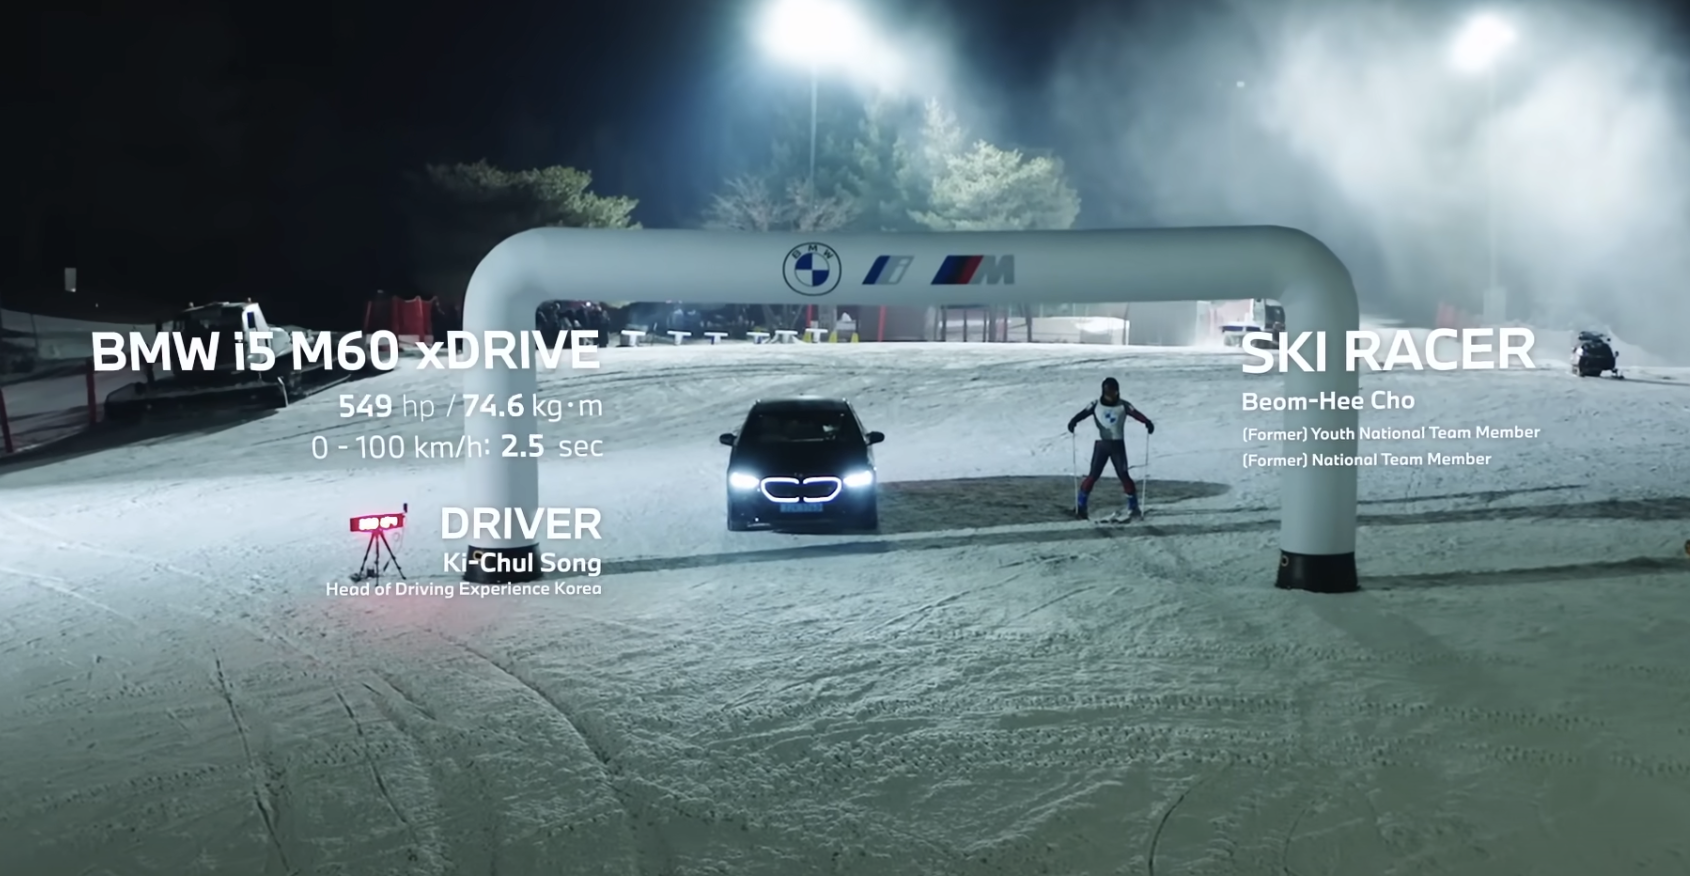 VIDEO: Former Champion Skier Races BMW i5 M60 Down Korean Ski Resort